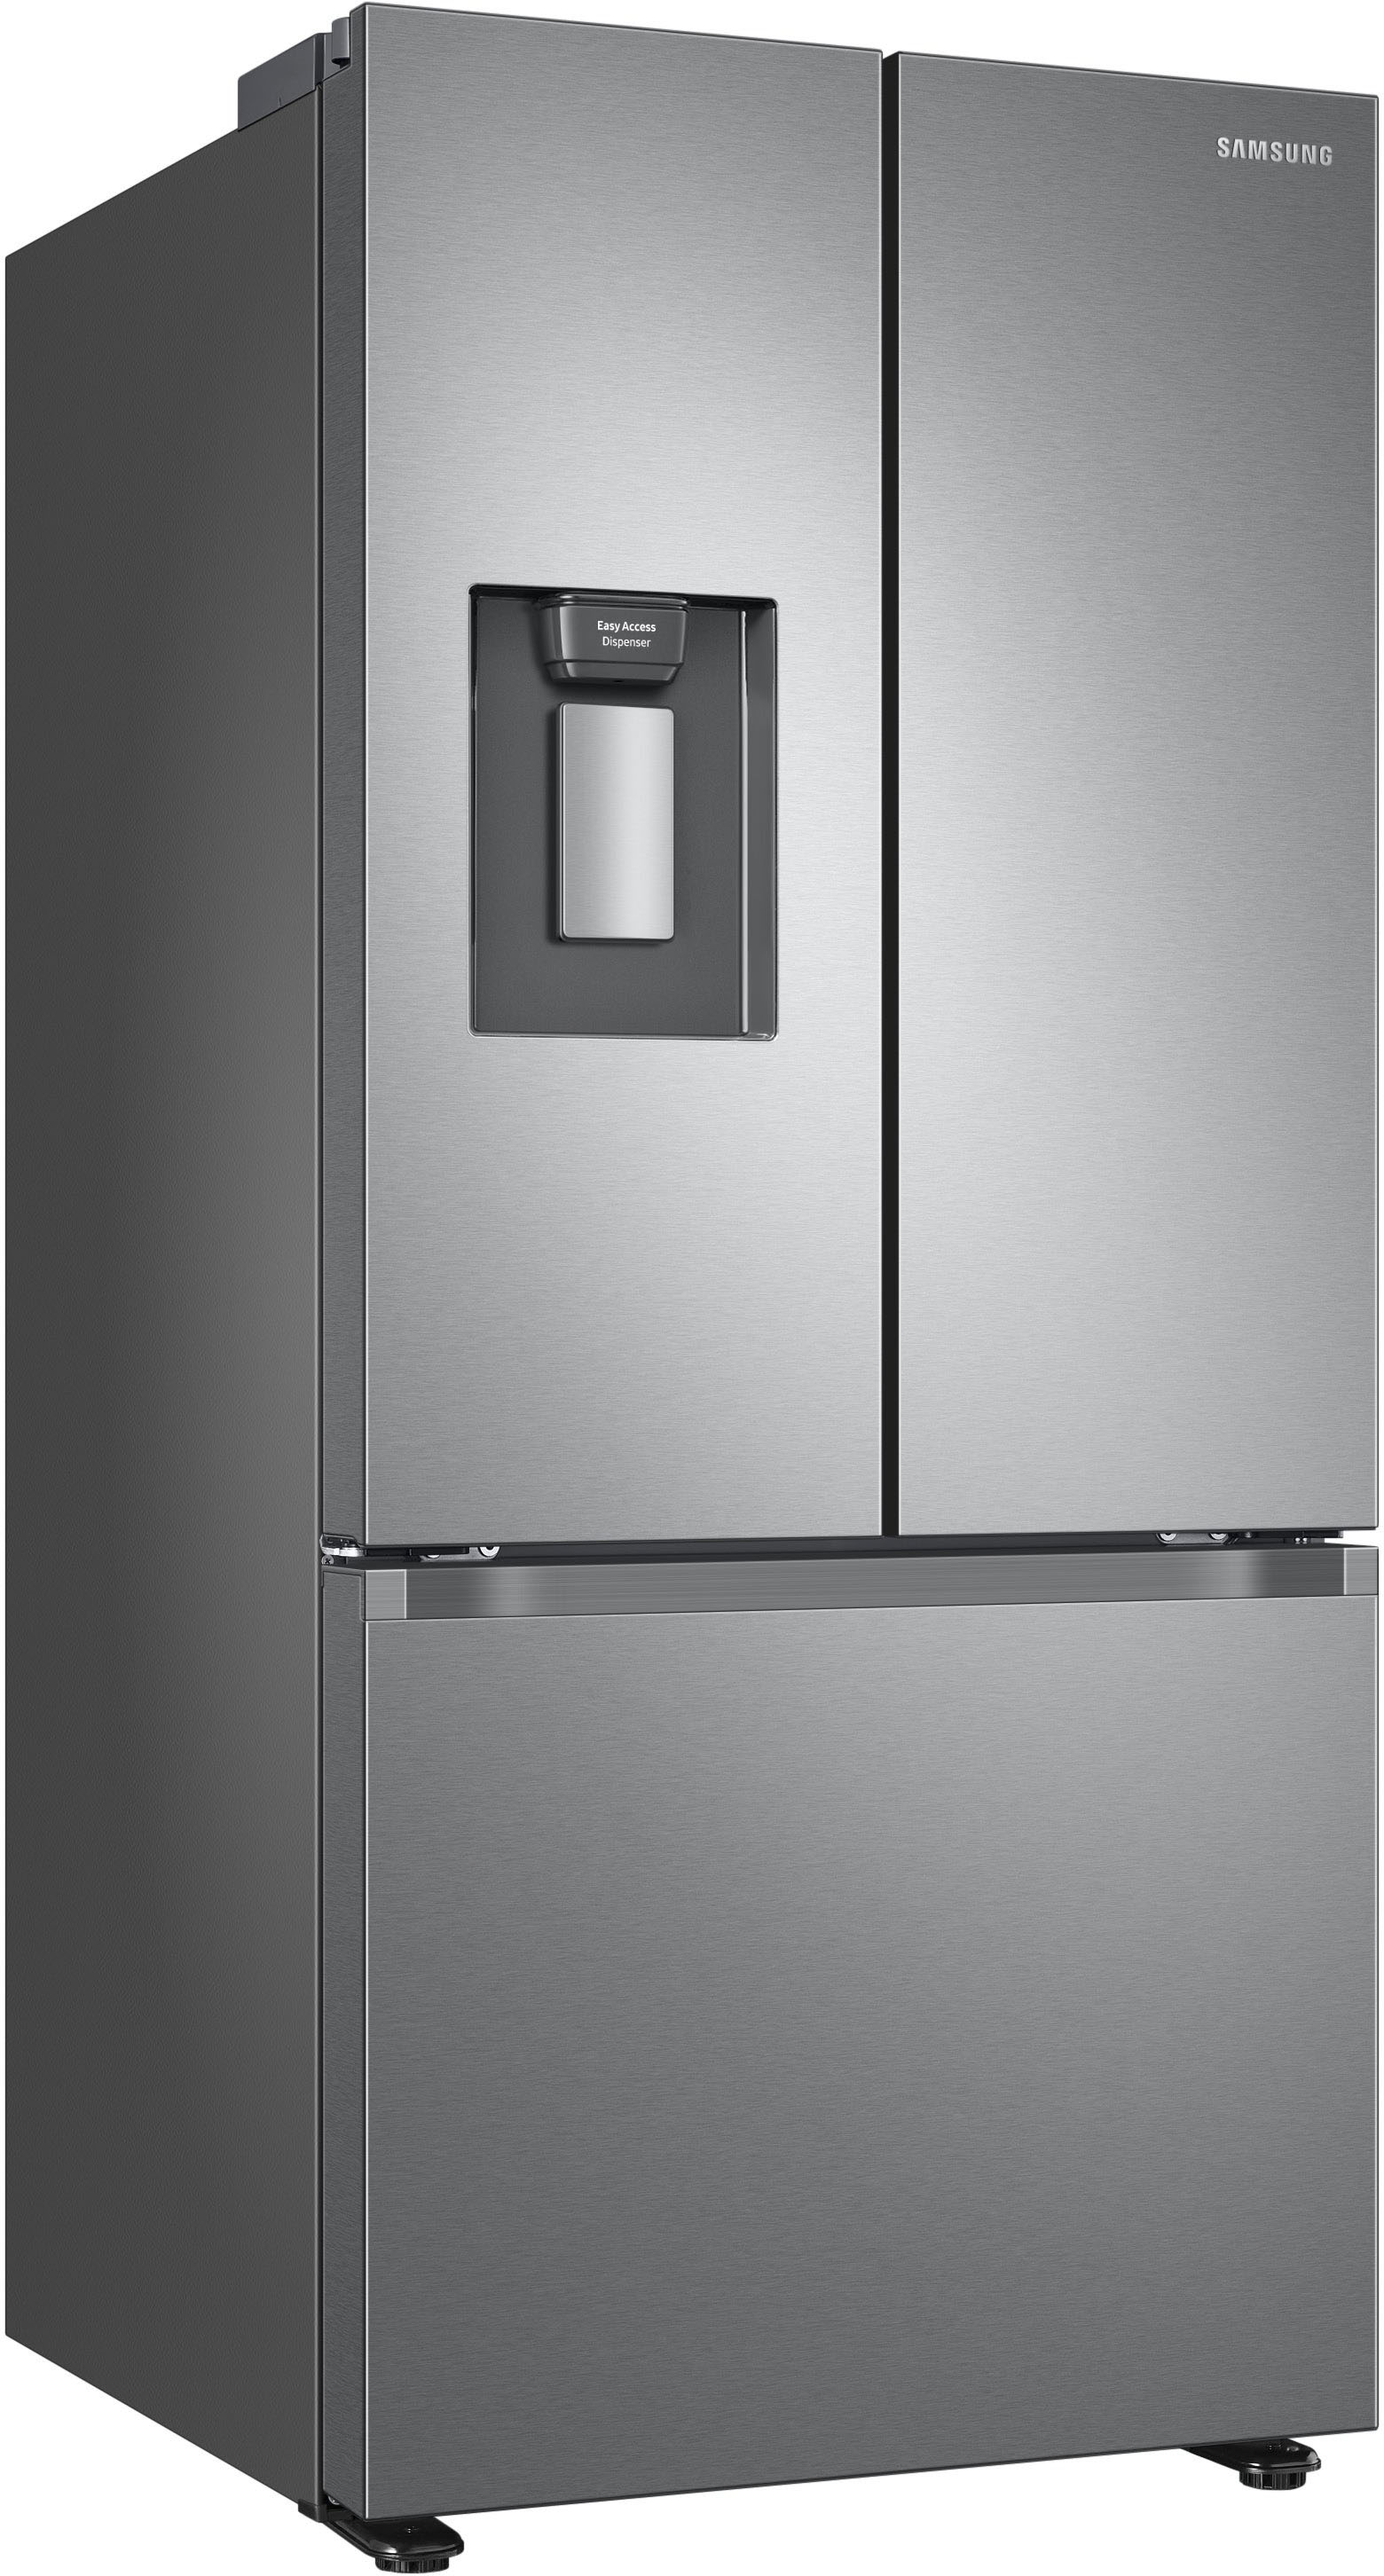 samsung smart refrigerator single door